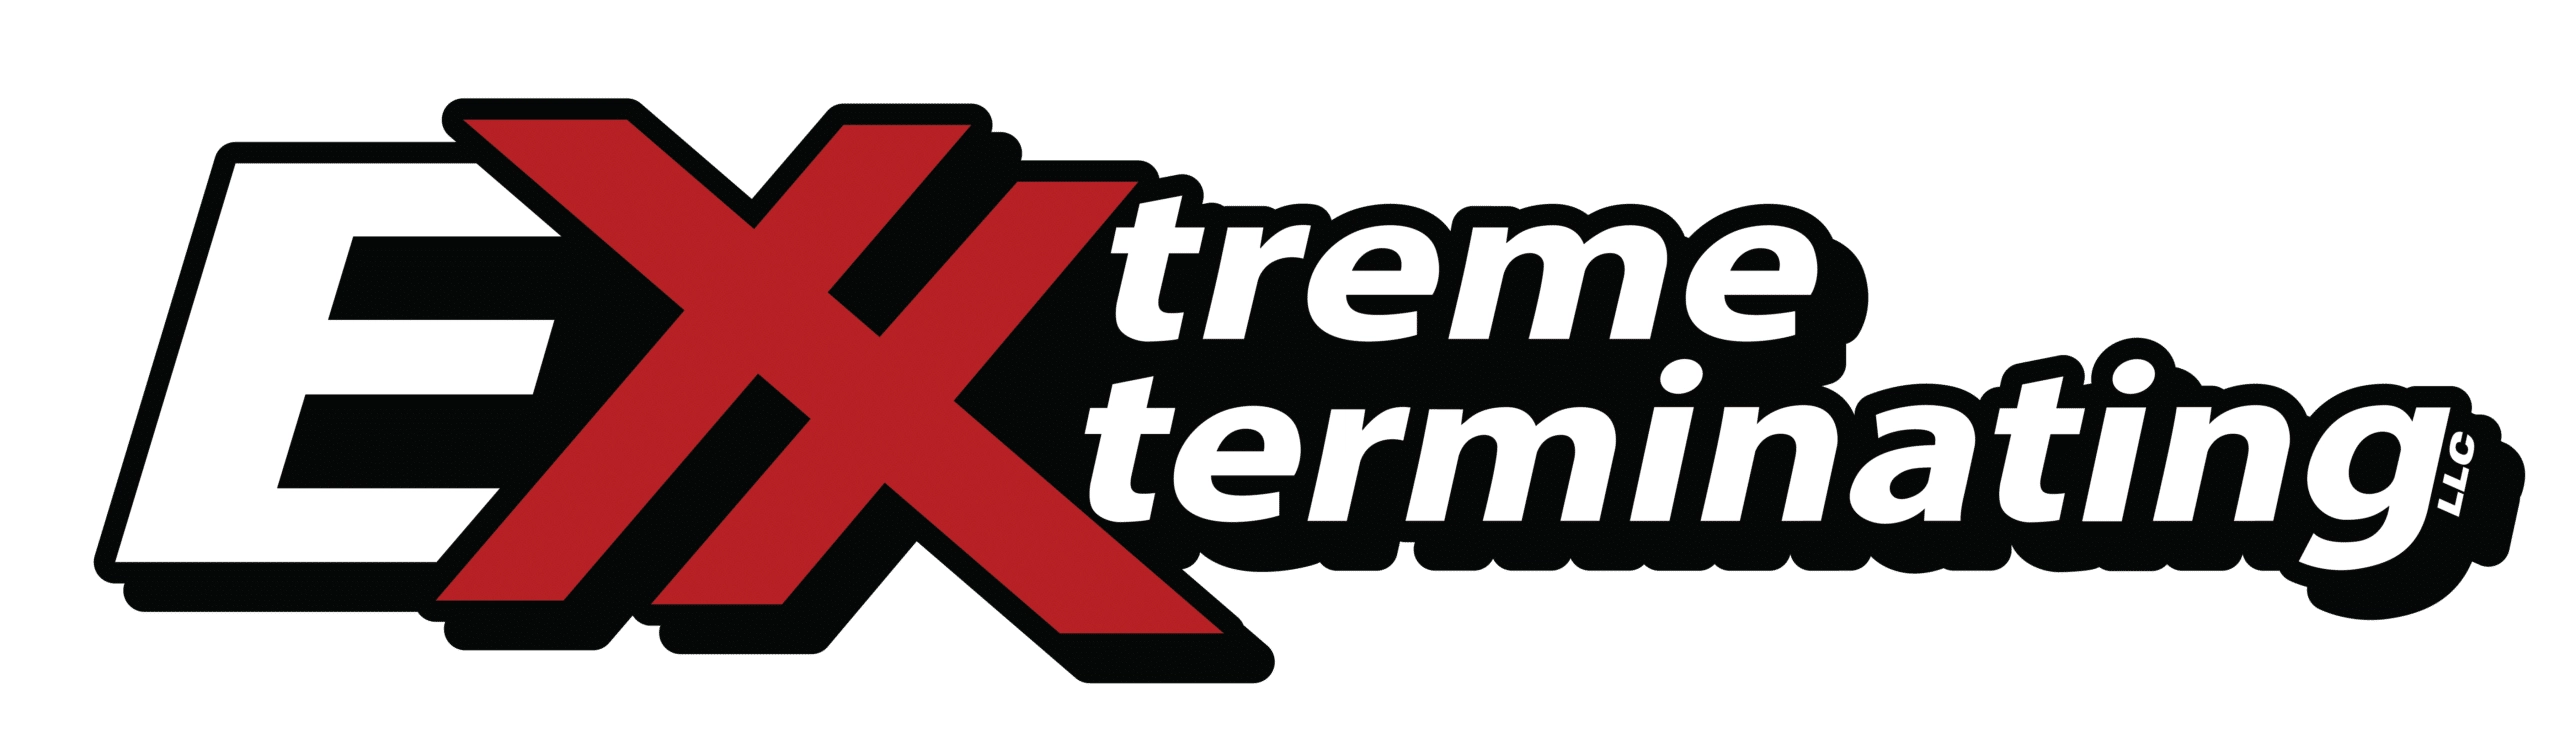 Extreme Exterminating Logo